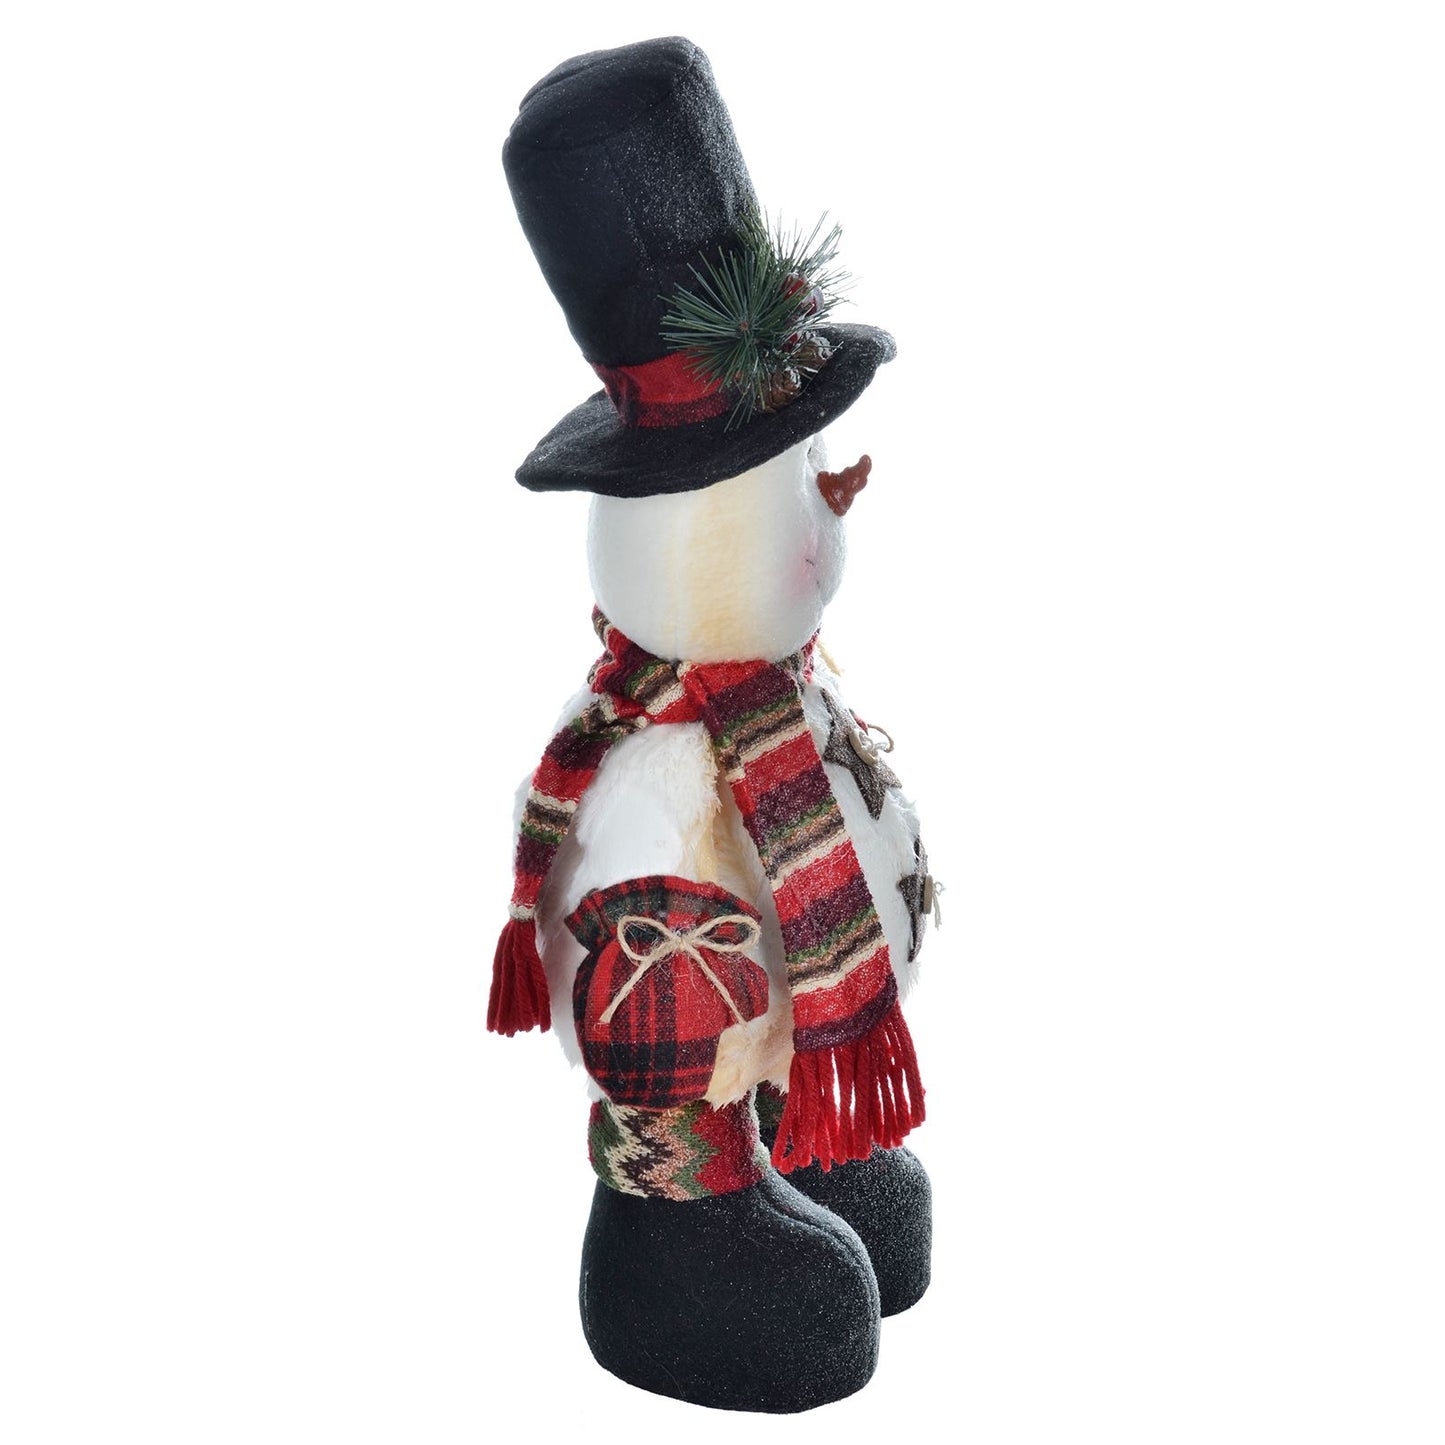 Mr Crimbo Plush Snowman Decoration Traditional Top Hat - MrCrimbo.co.uk -XS5145 - 40cm -christmas decorations